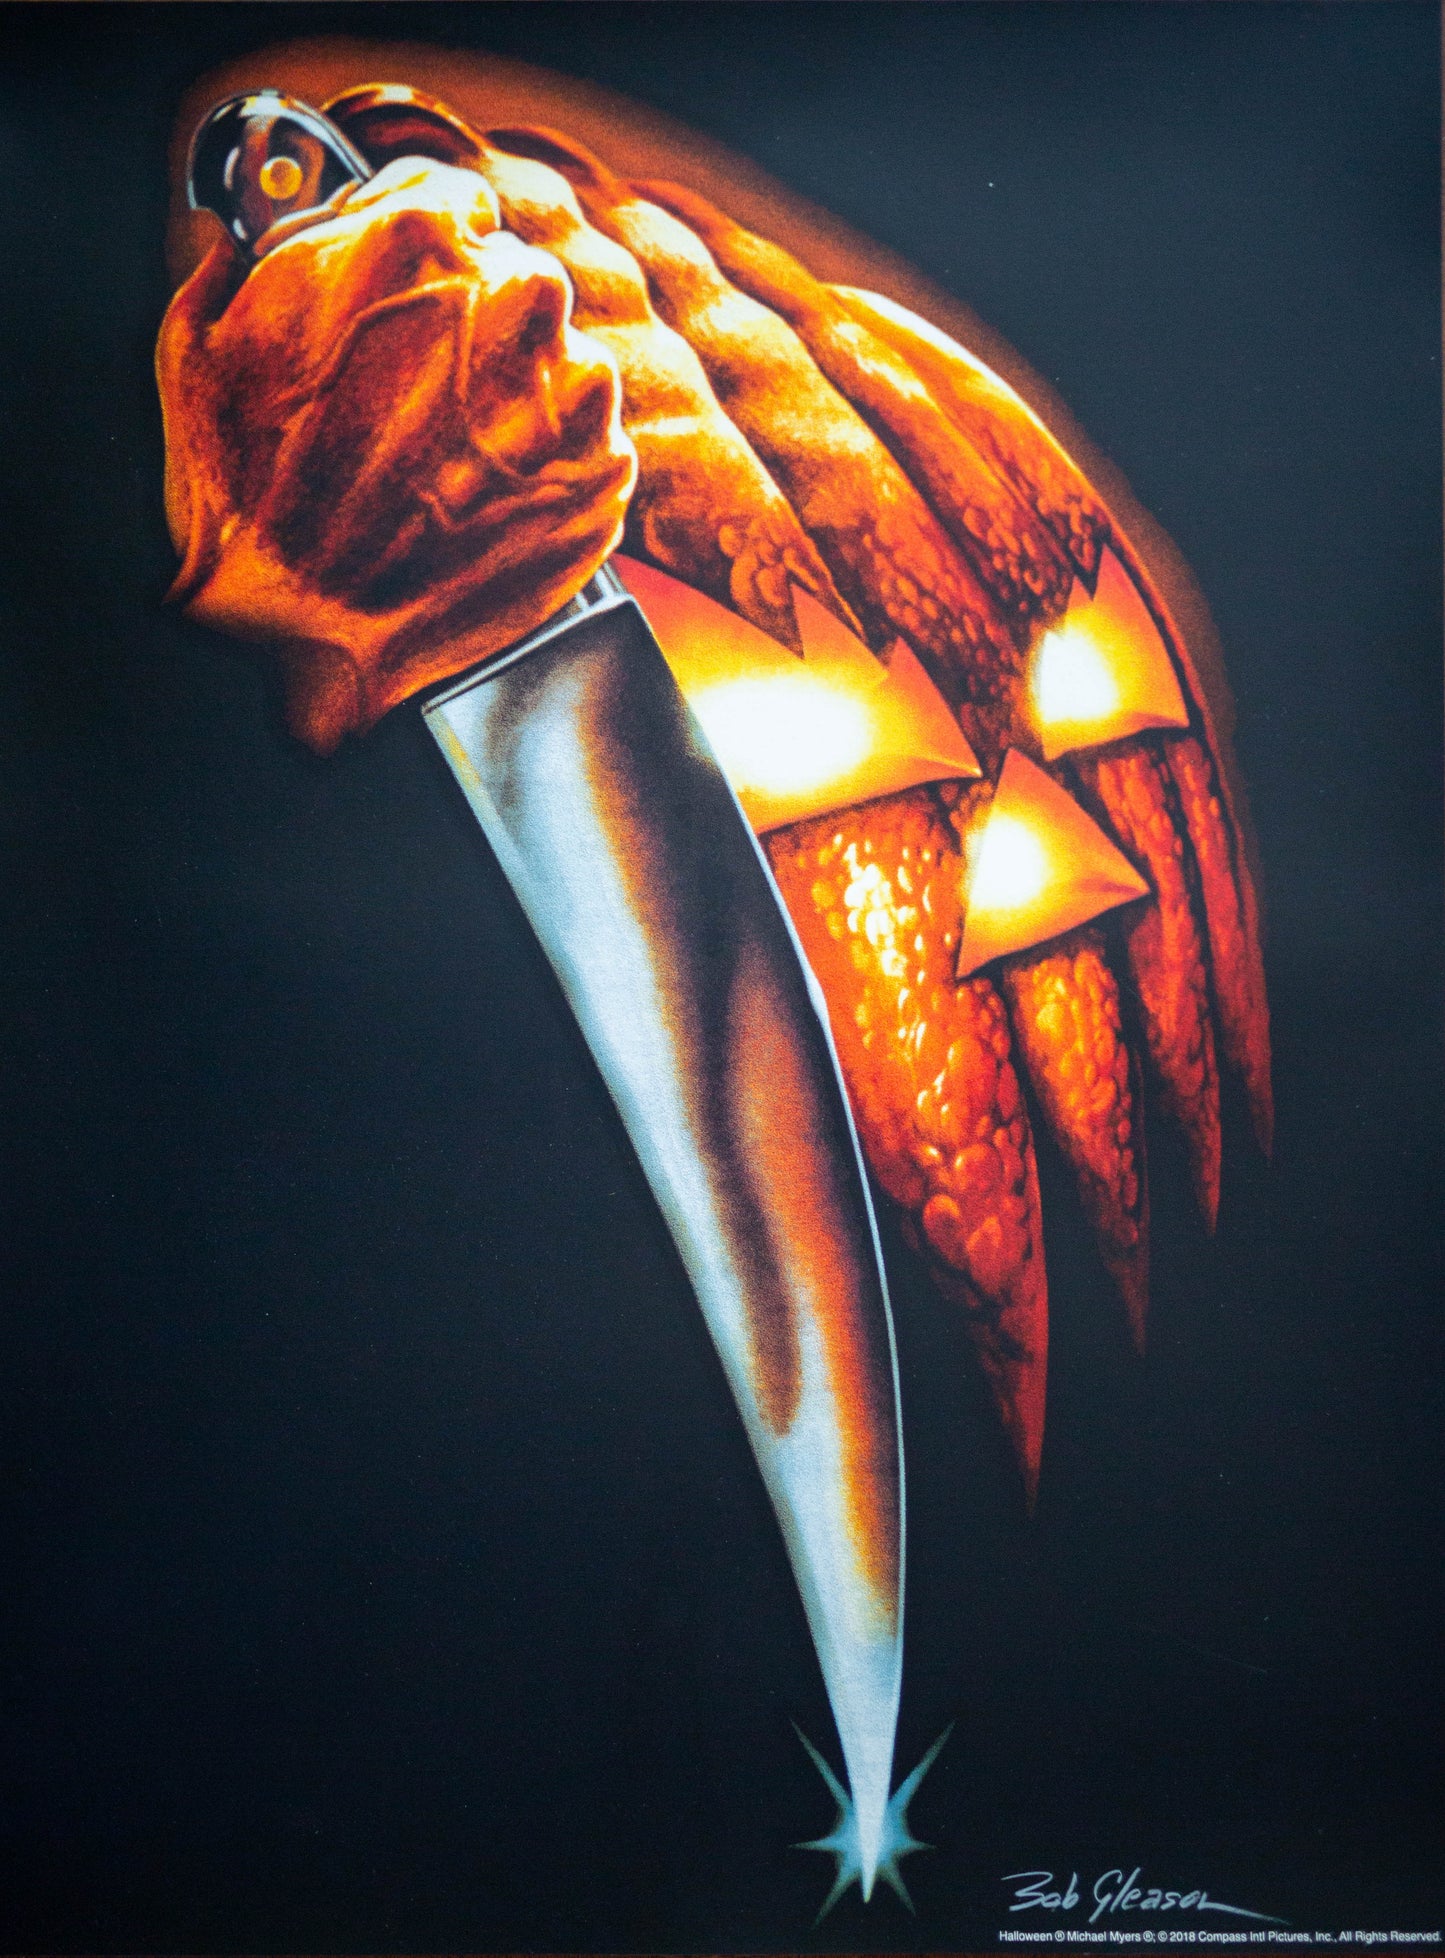 Bob Gleason "Halloween" Art Print